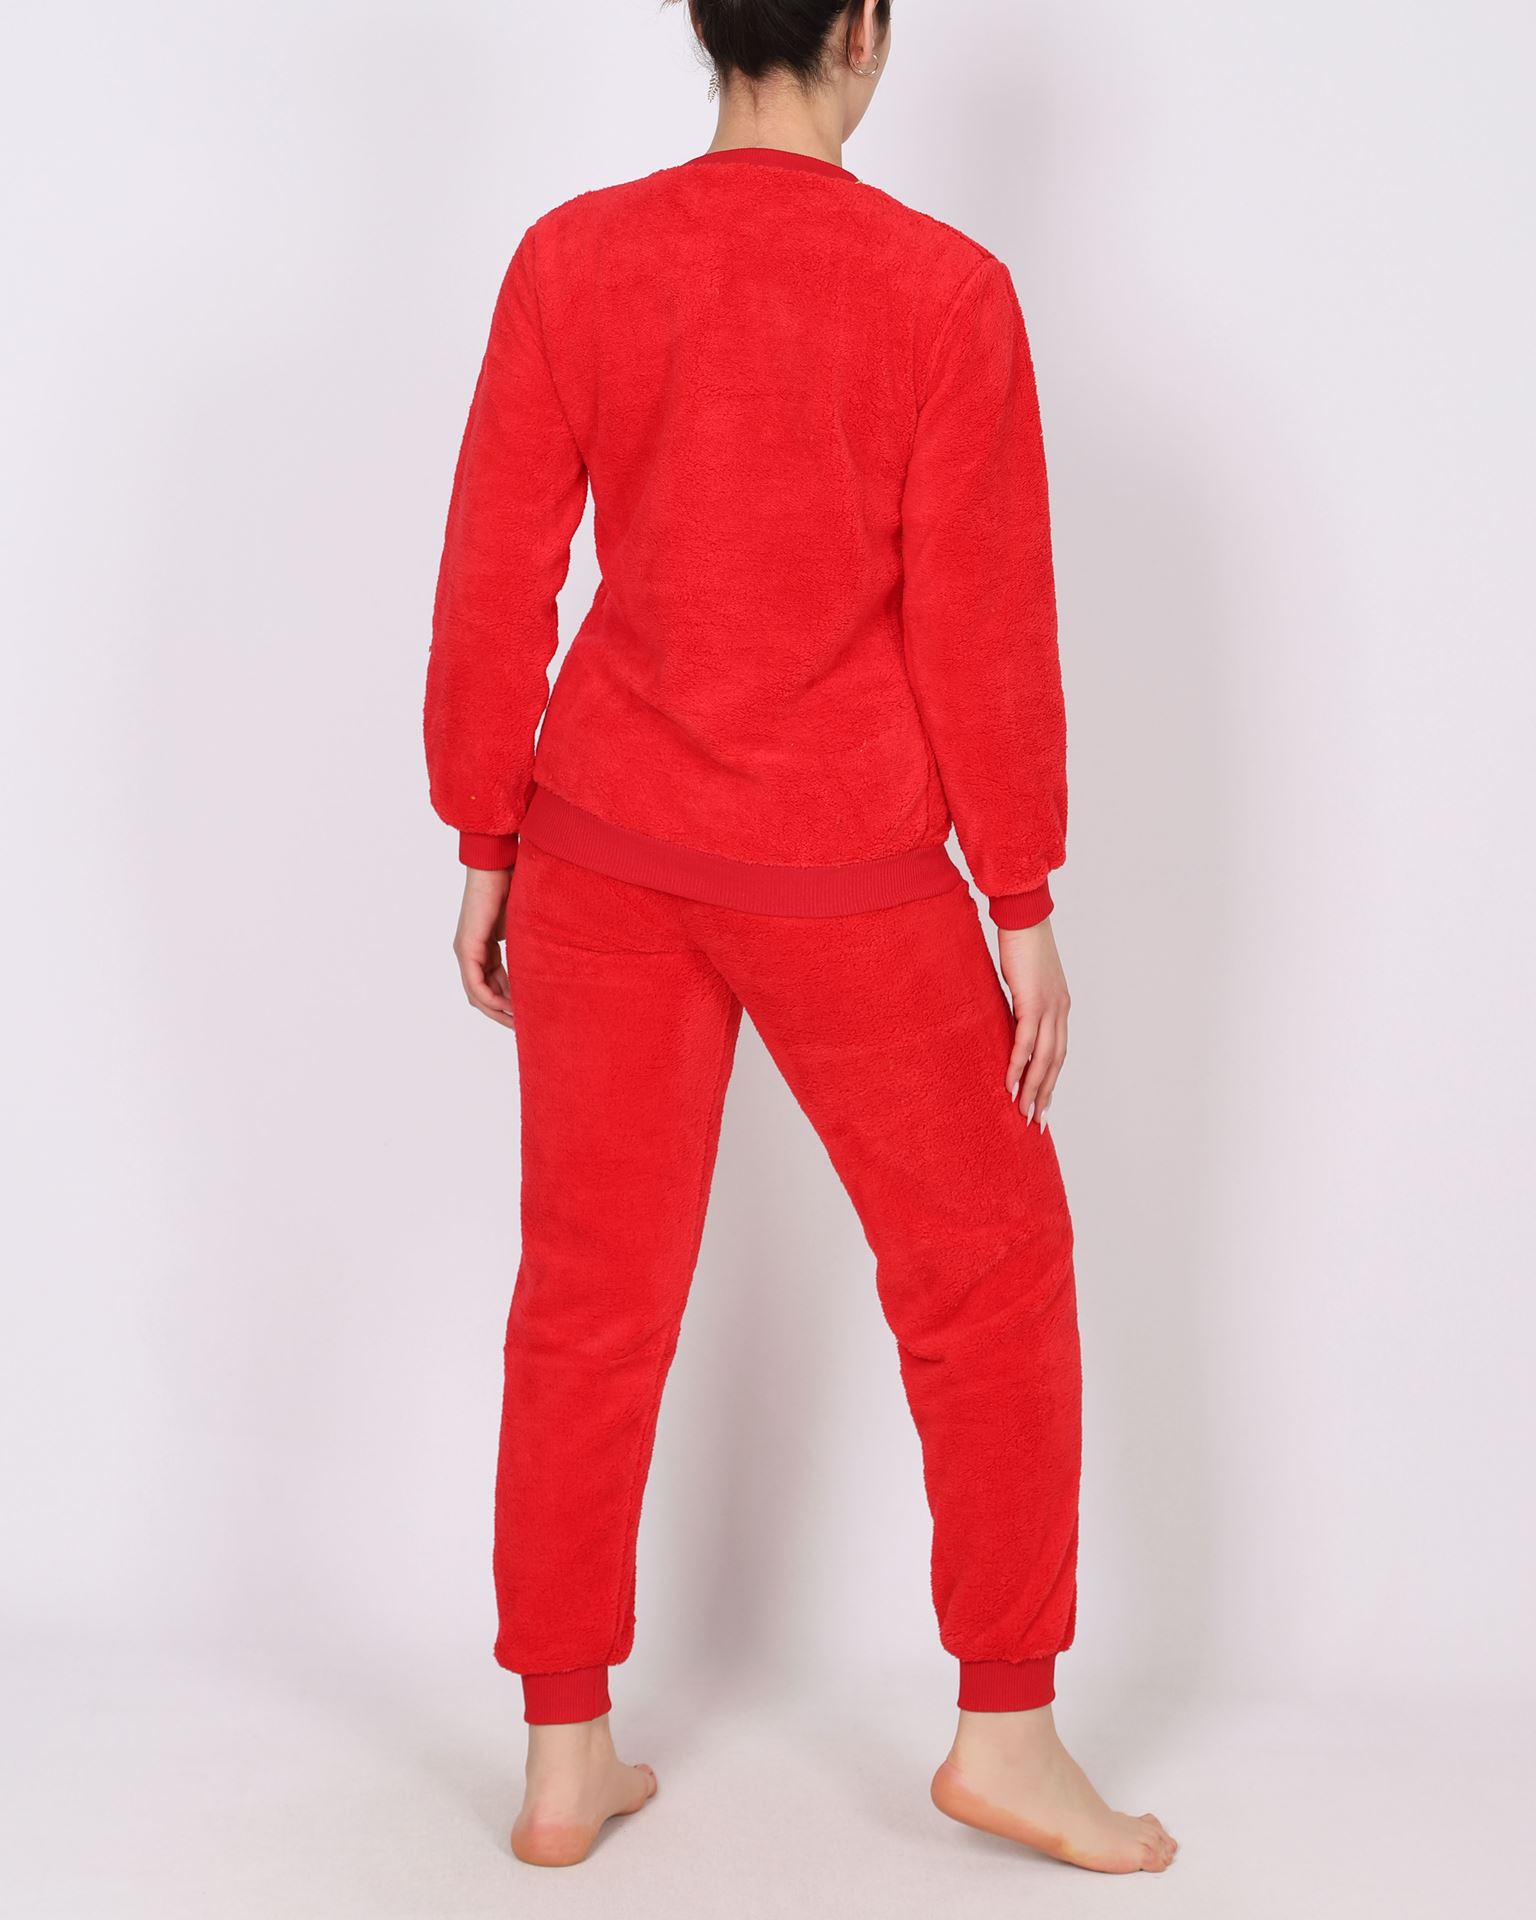 Kırmızı Nakışlı Welsoft Pijama Takımı PJM1860